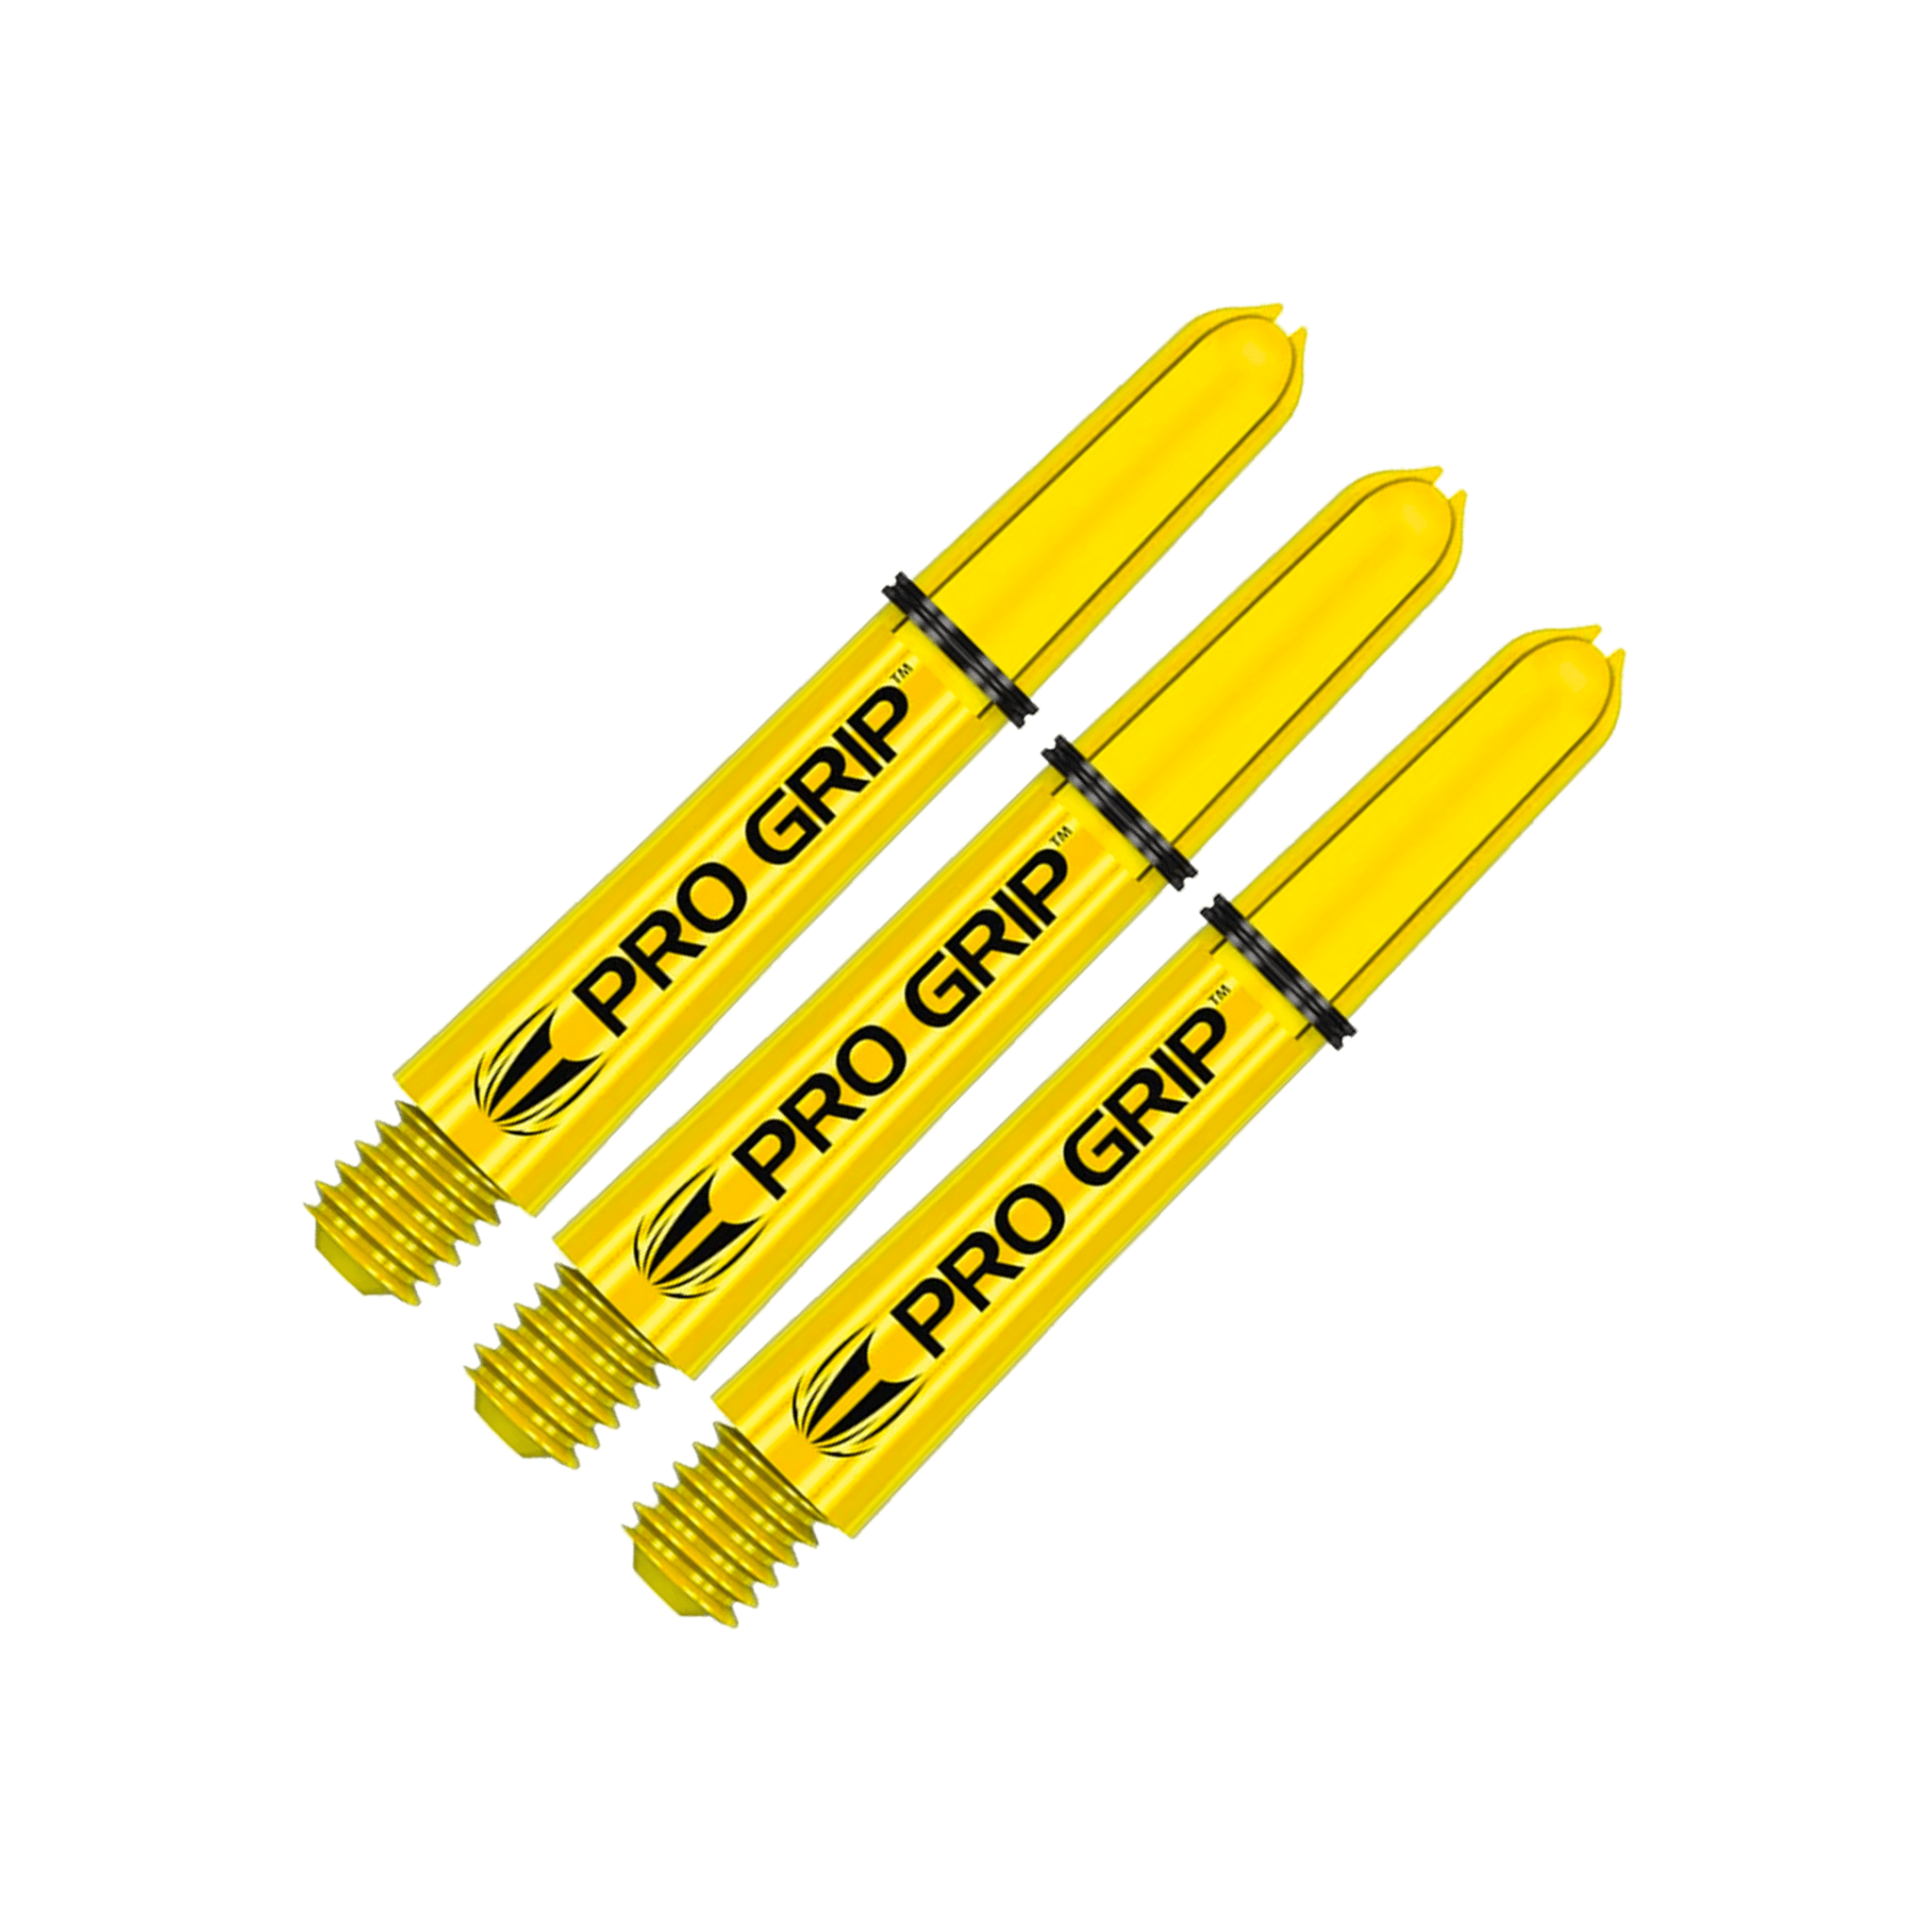 Target Pro Grip Multi Pack - Nylon Dart Shafts (3 Sets) Yellow / Short (34mm) Shafts